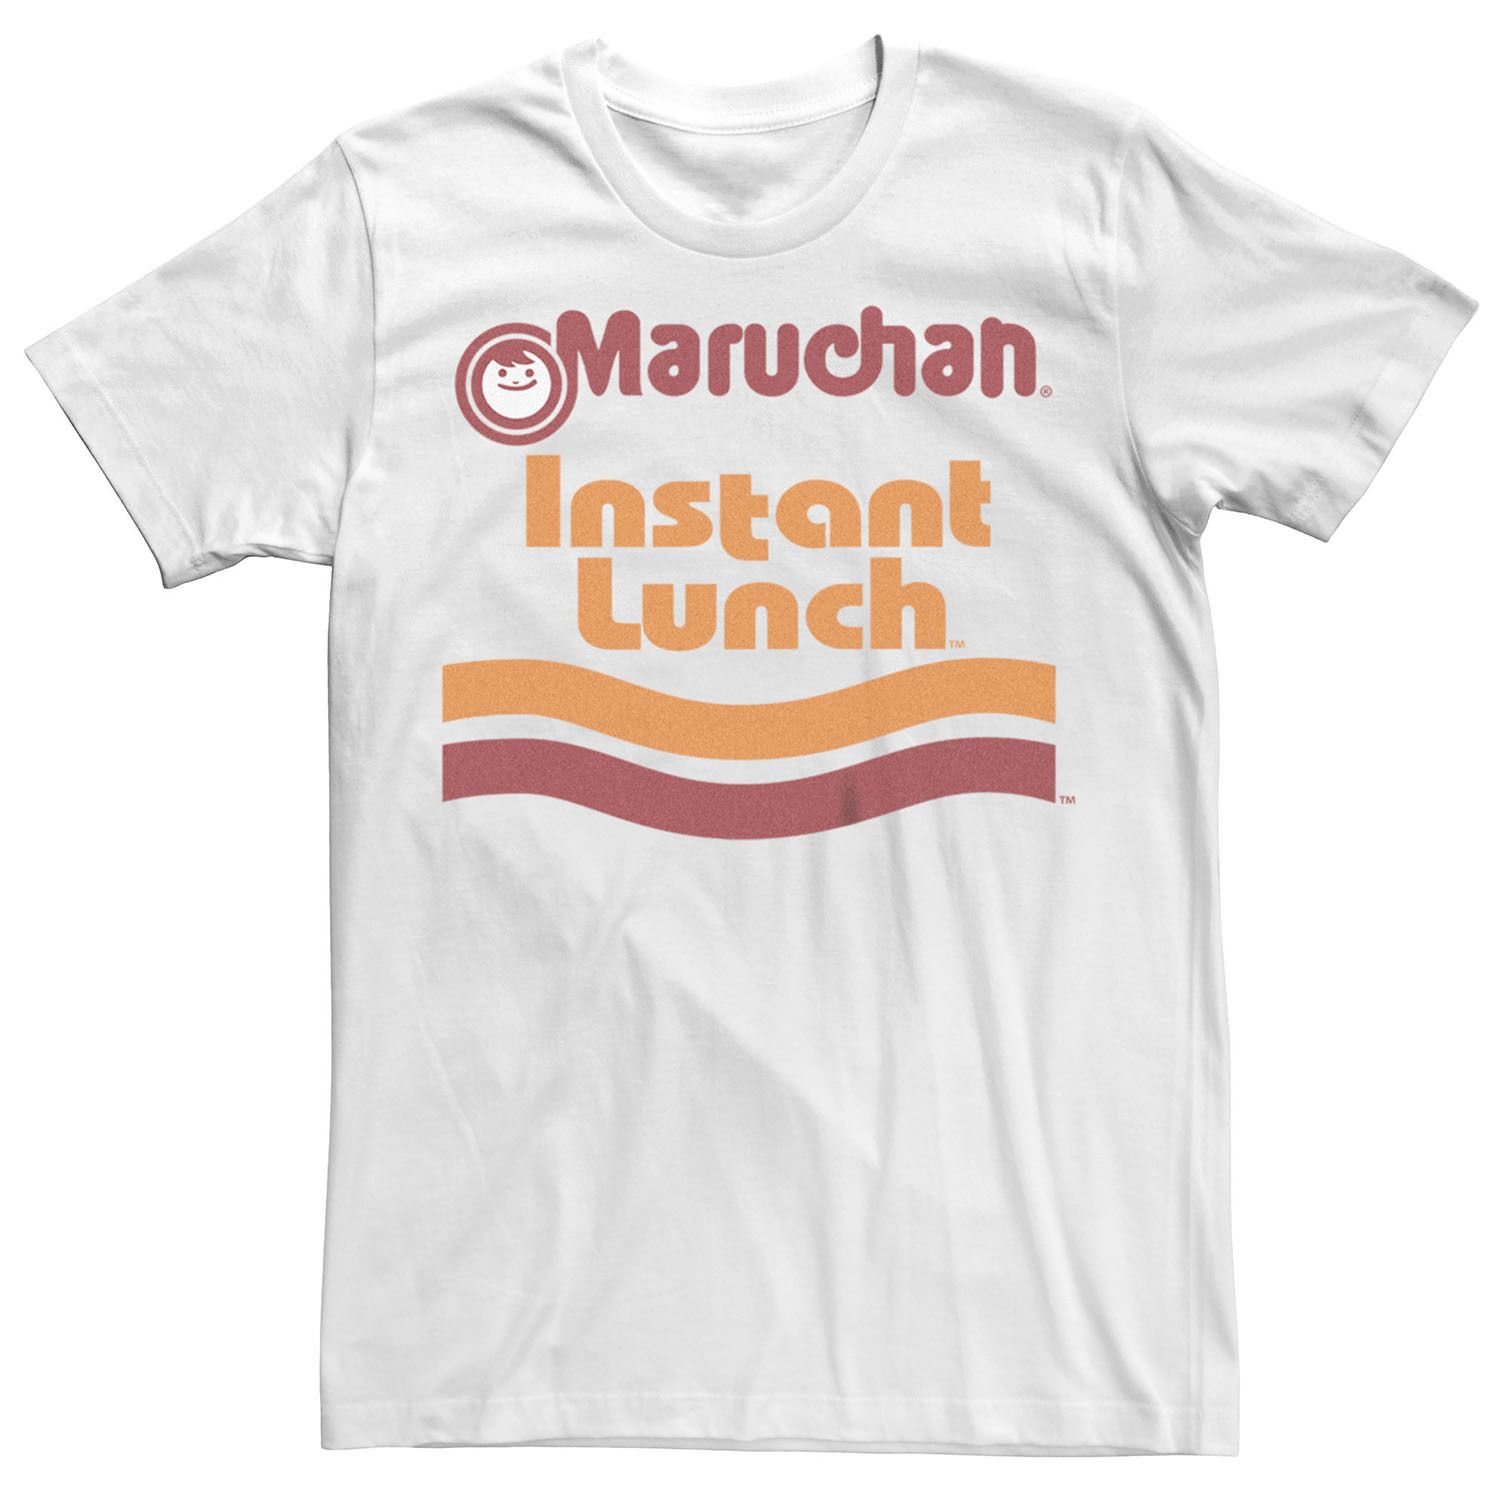 Мужская футболка Maruchan Instant Lunch Classic с графическим логотипом Licensed Character лапша maruchan instant lunch hot spicy lime shrimp с креветками 64 г